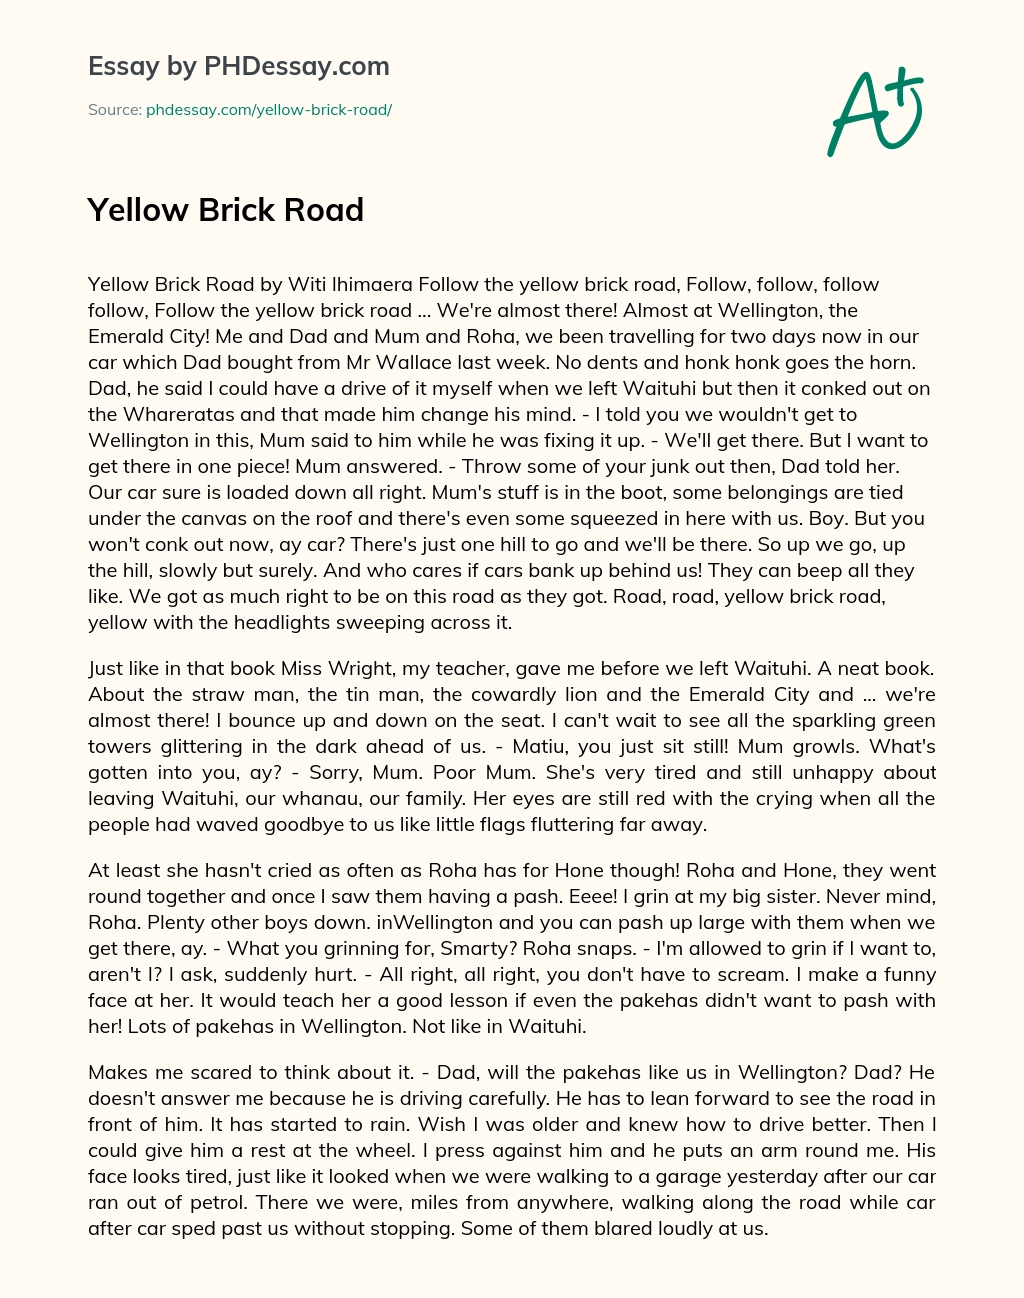 Yellow Brick Road essay